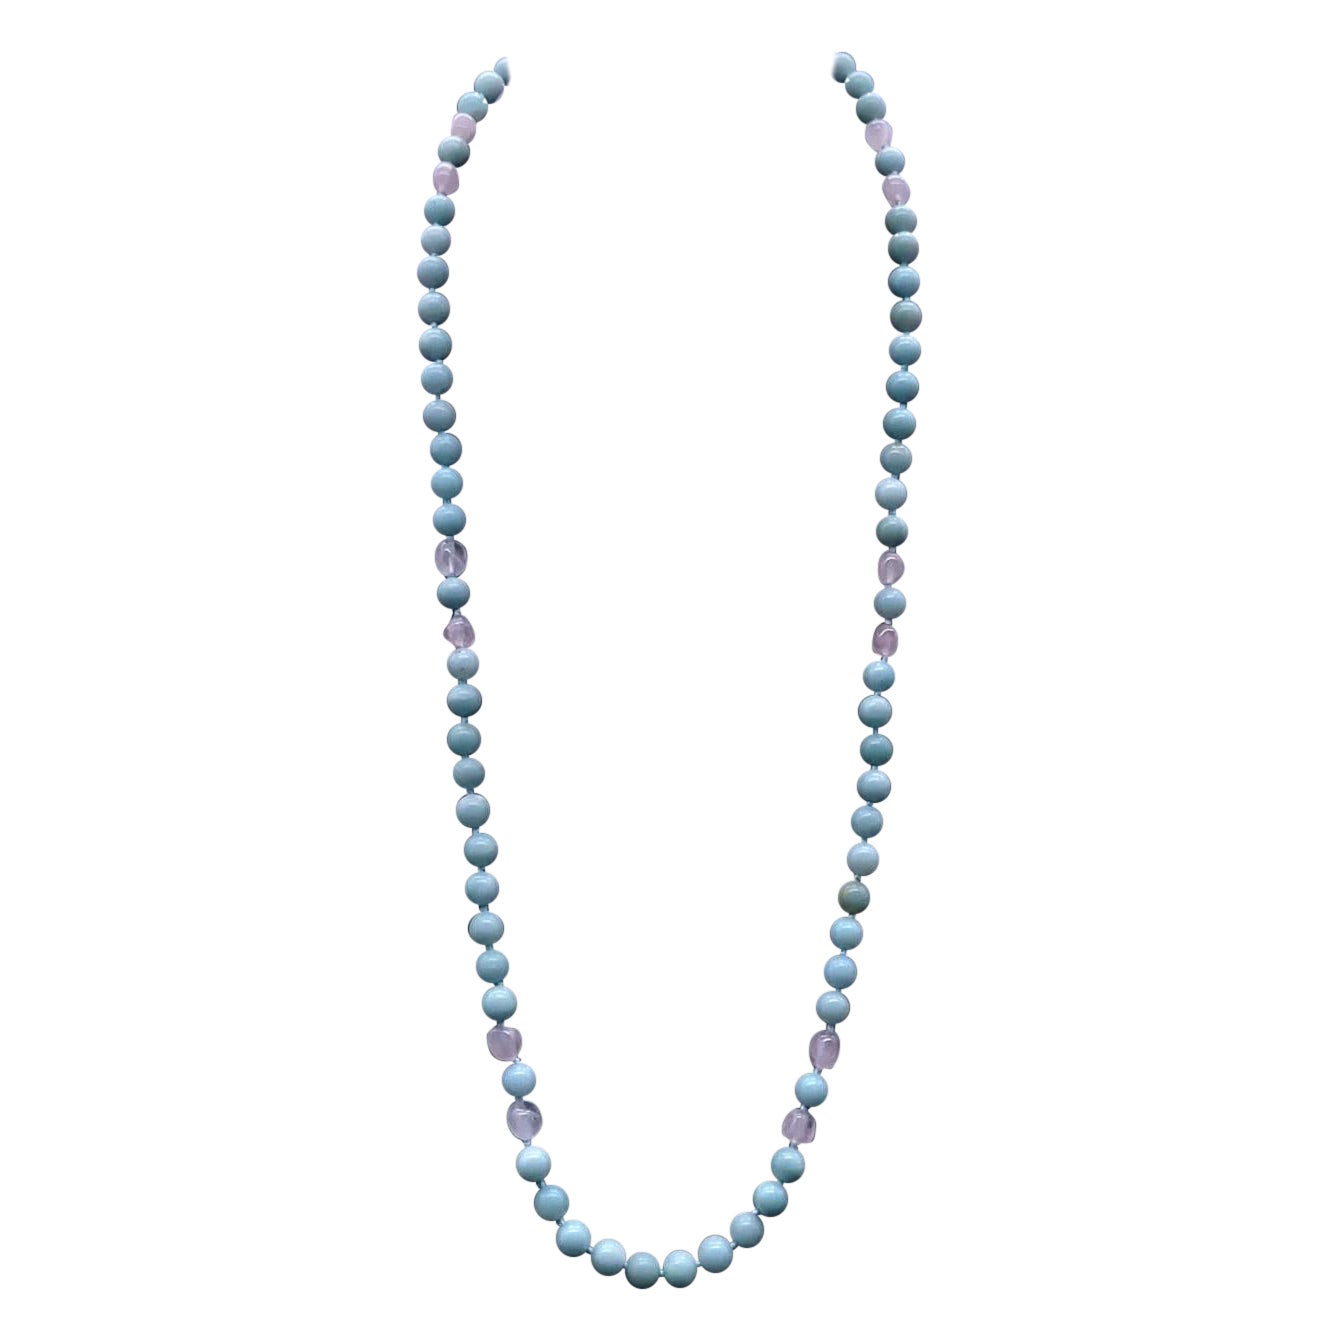 A.Jeschel Stylish Amazonite and Rose Quartz long necklace.